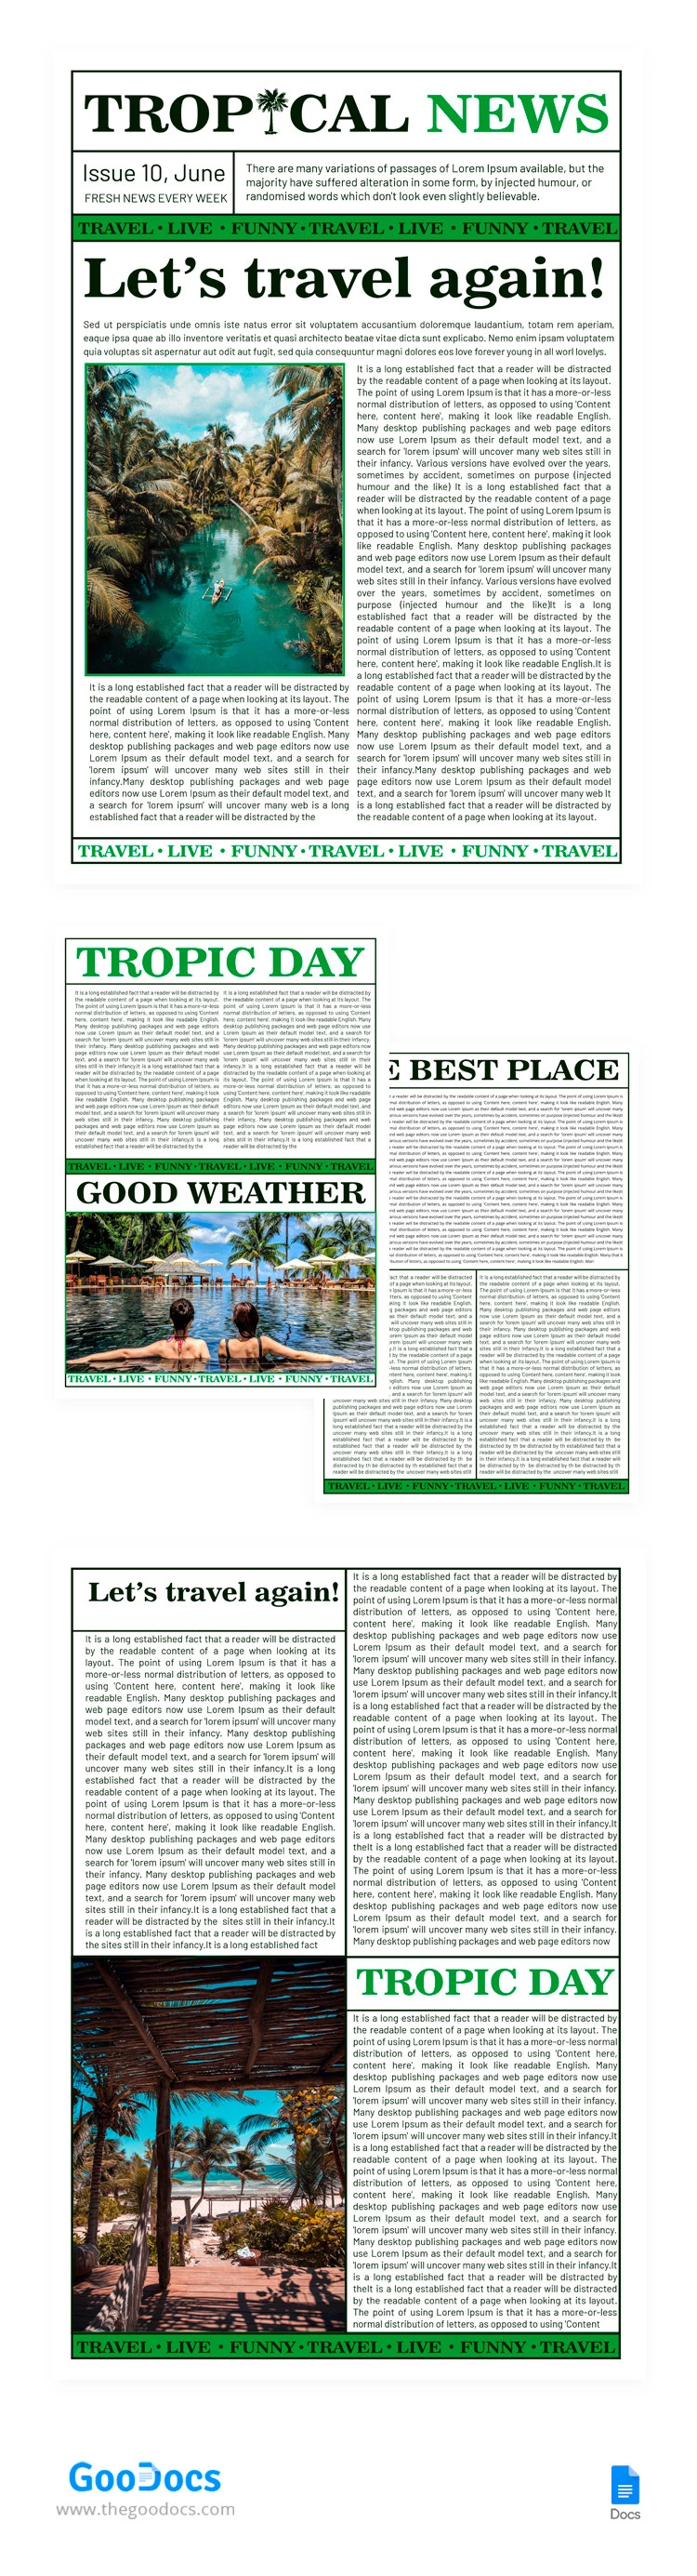 Tropische Zeitung - free Google Docs Template - 10065441